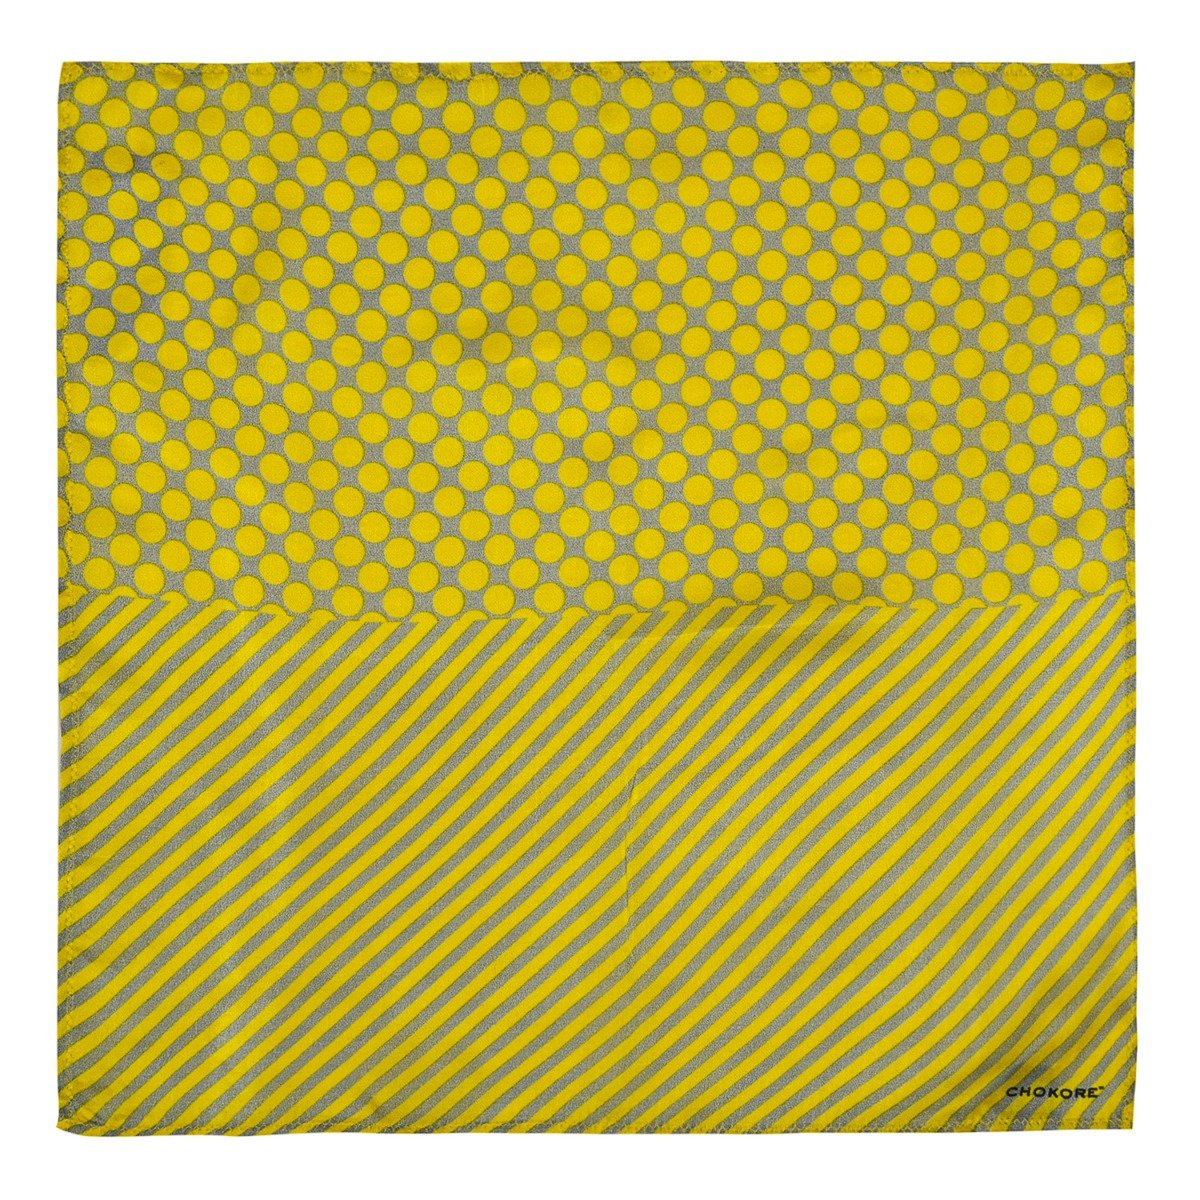 Chokore 2-in-1 Yellow & Light Grey Silk Pocket Square